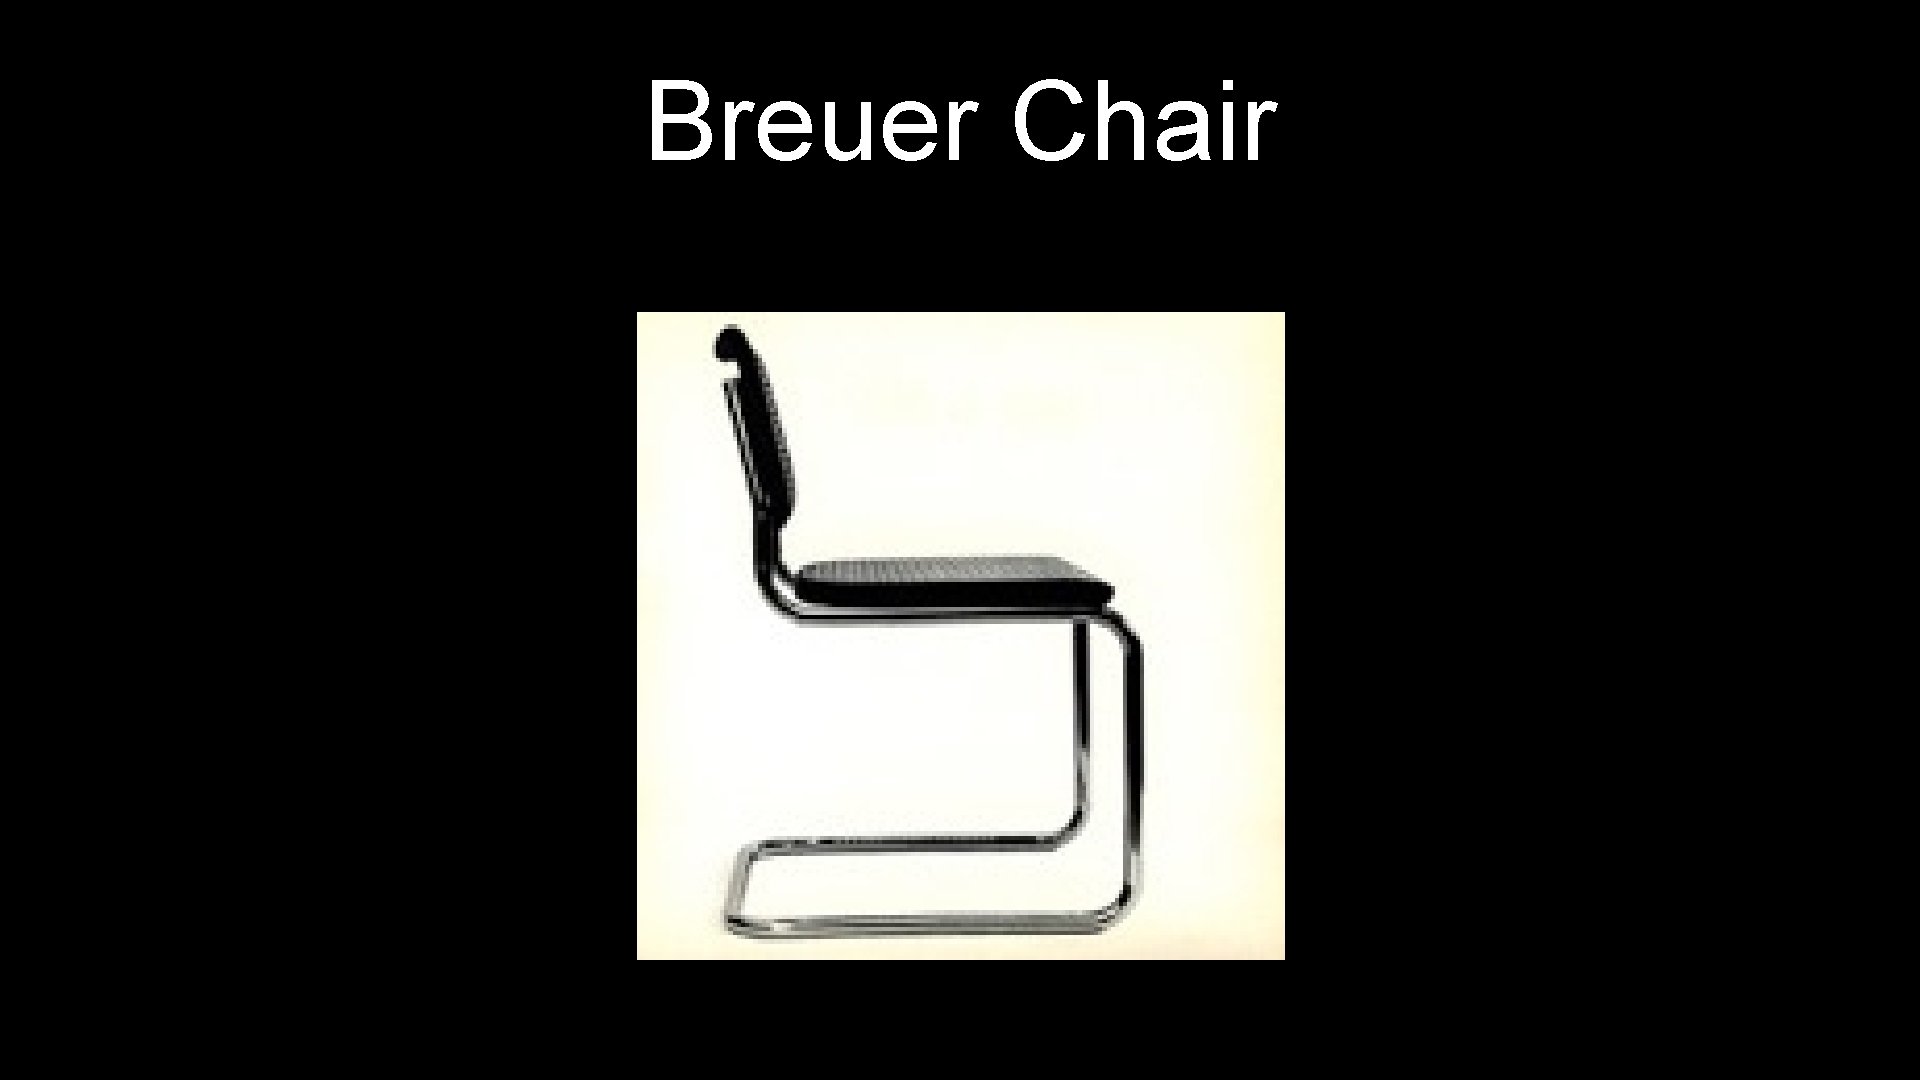 Breuer Chair 